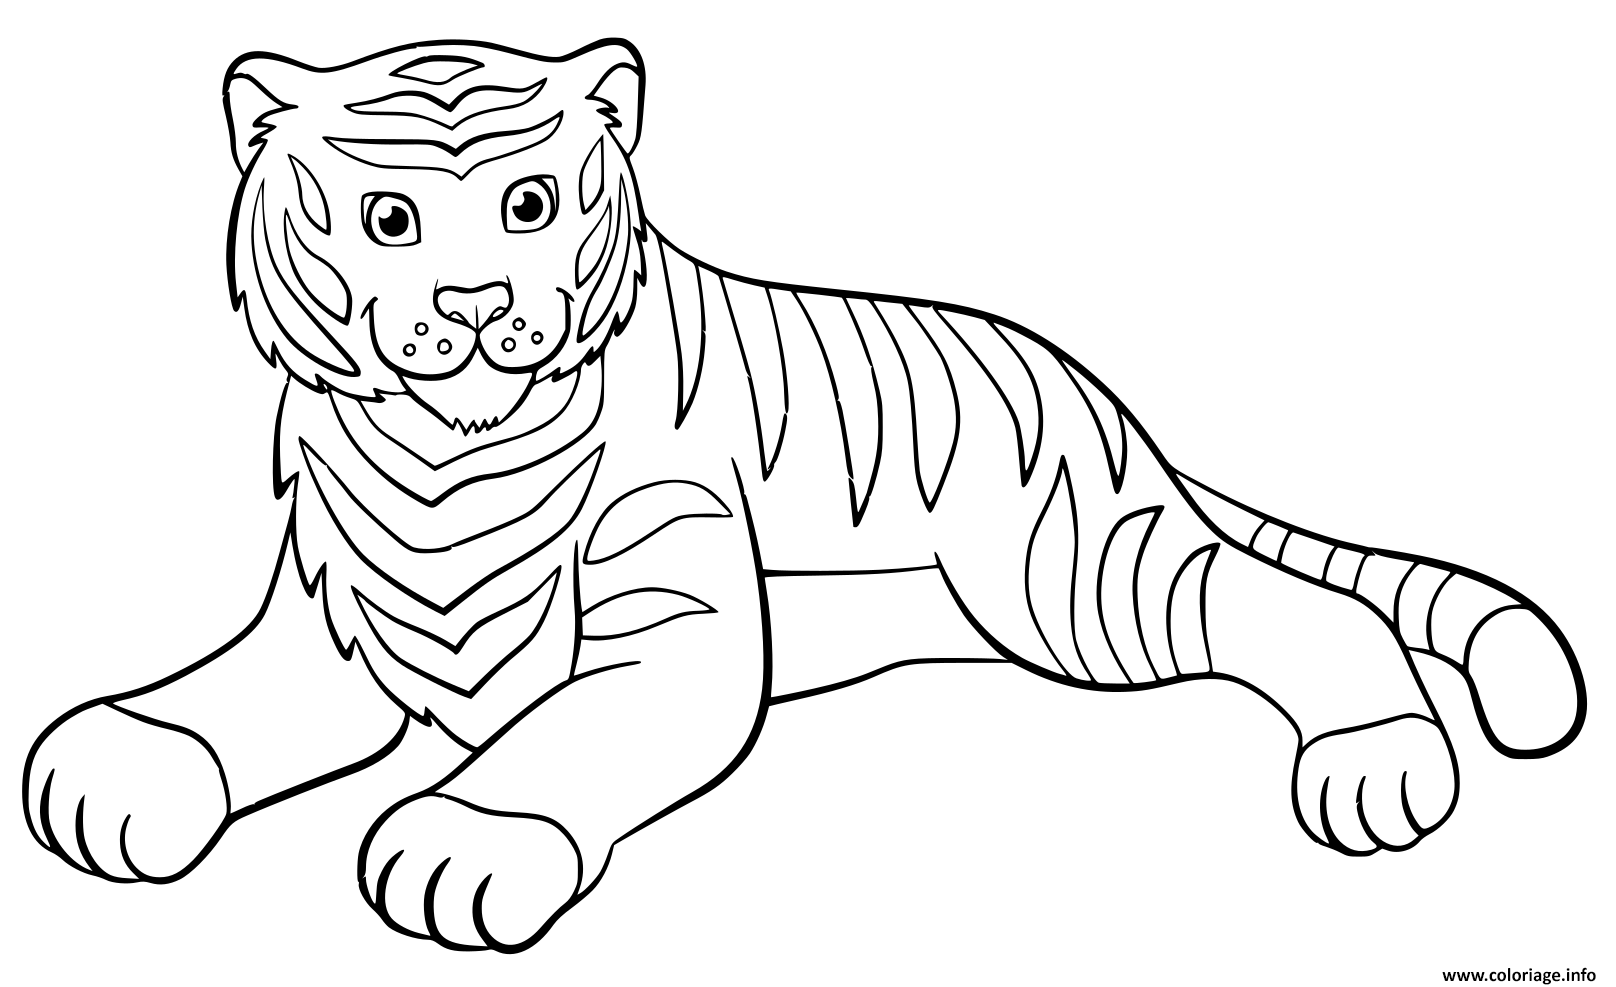 Dessin adorable tigre qui se repose Coloriage Gratuit à Imprimer